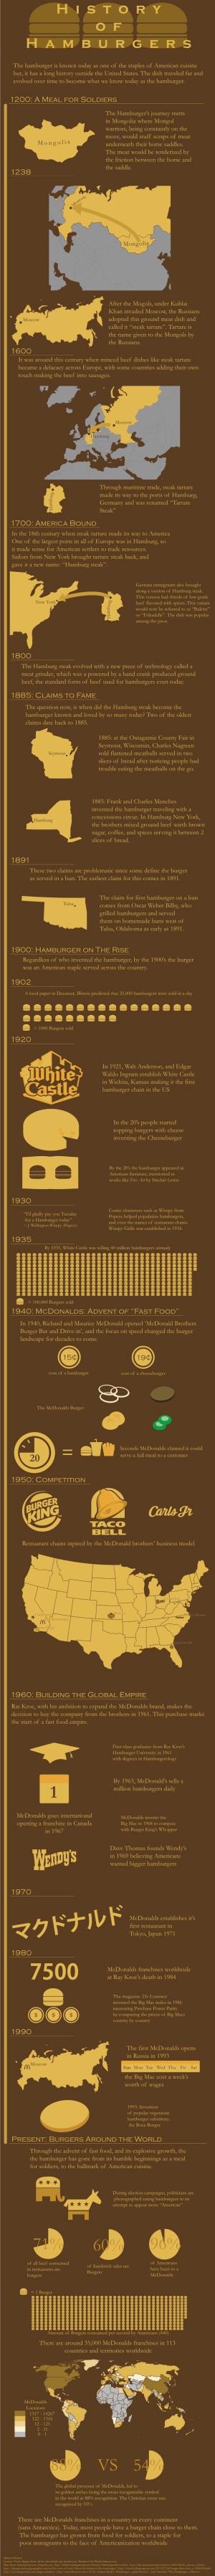 History of Hamburgers Michael Dickens